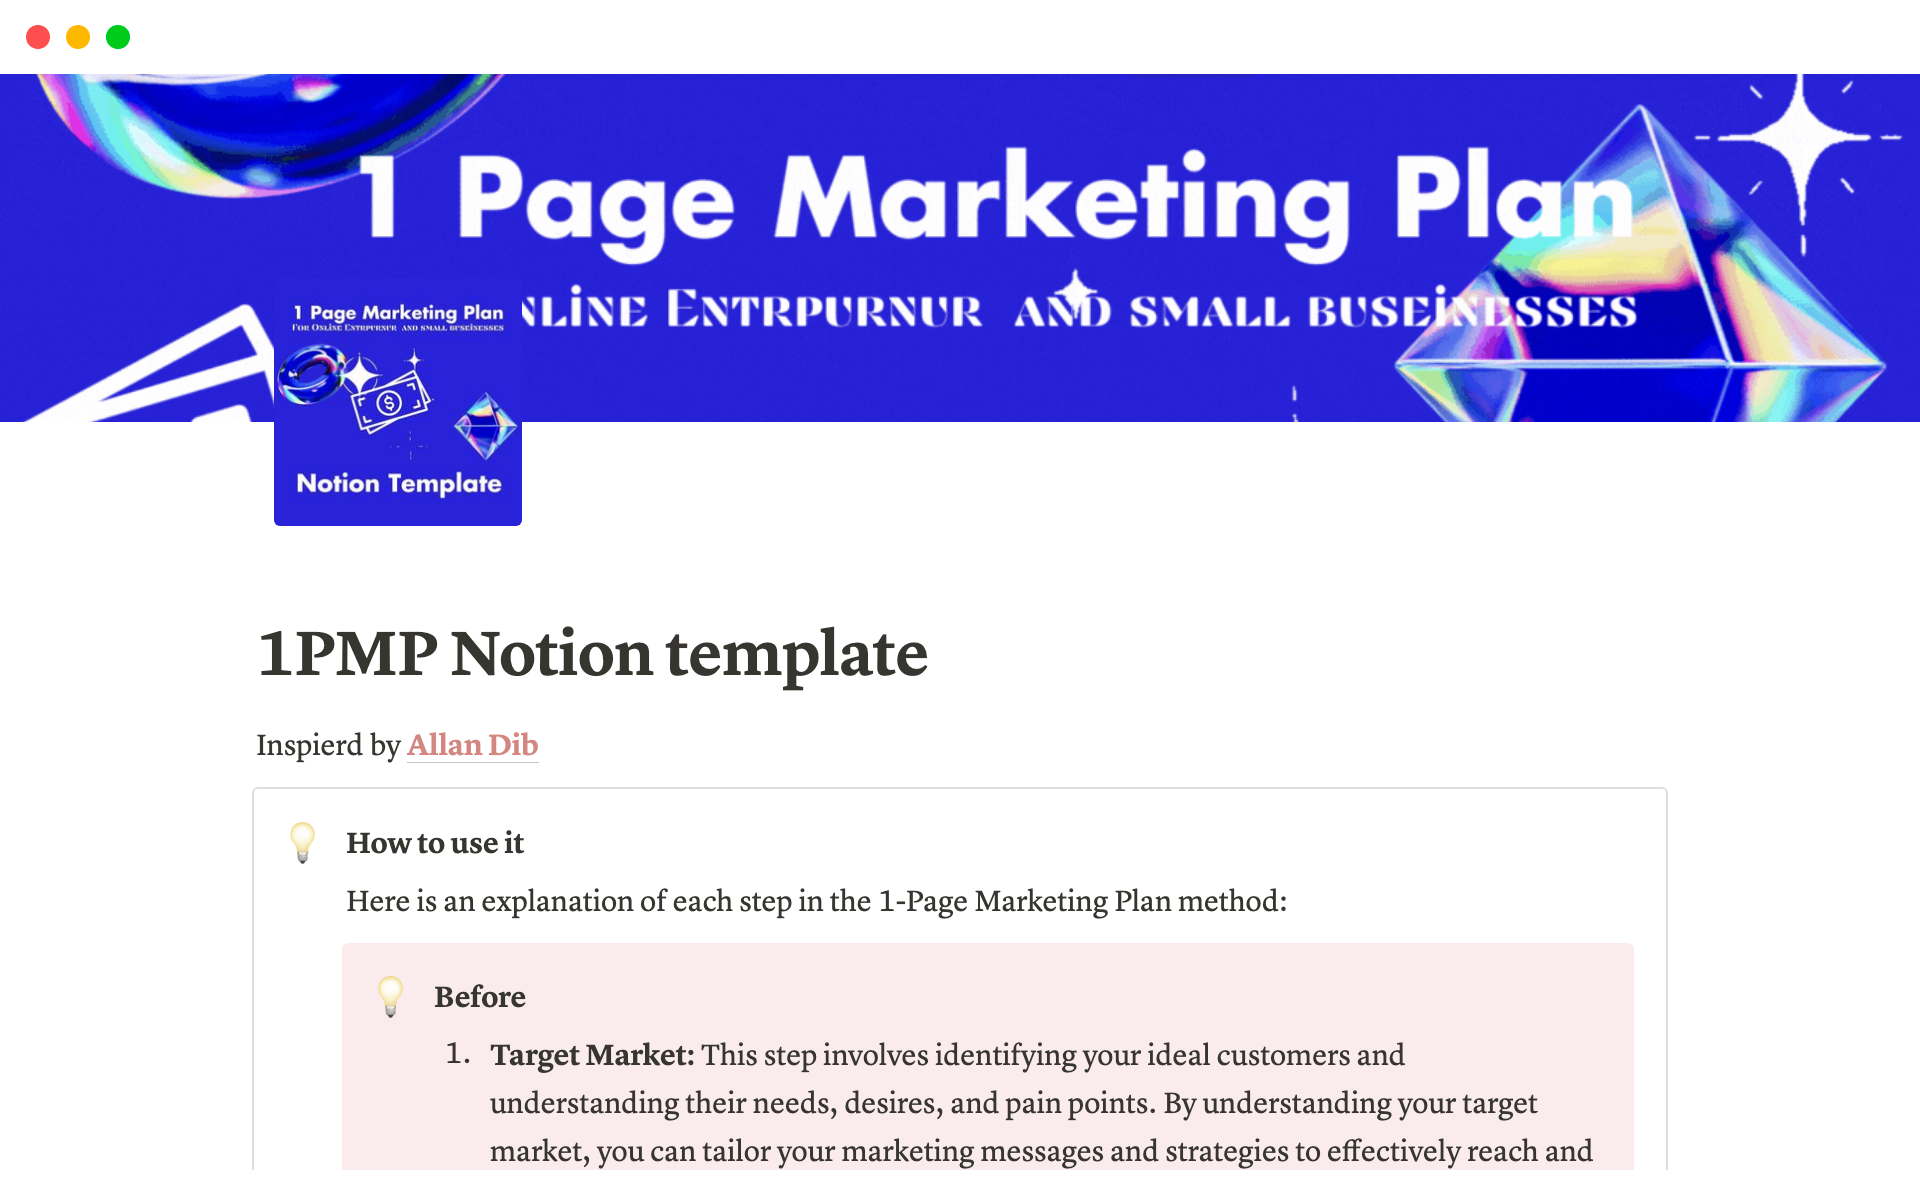 Aperçu du modèle de MarketBoost: The Ultimate 1-Page Marketing Plan Notion Template for Small Online Businesses